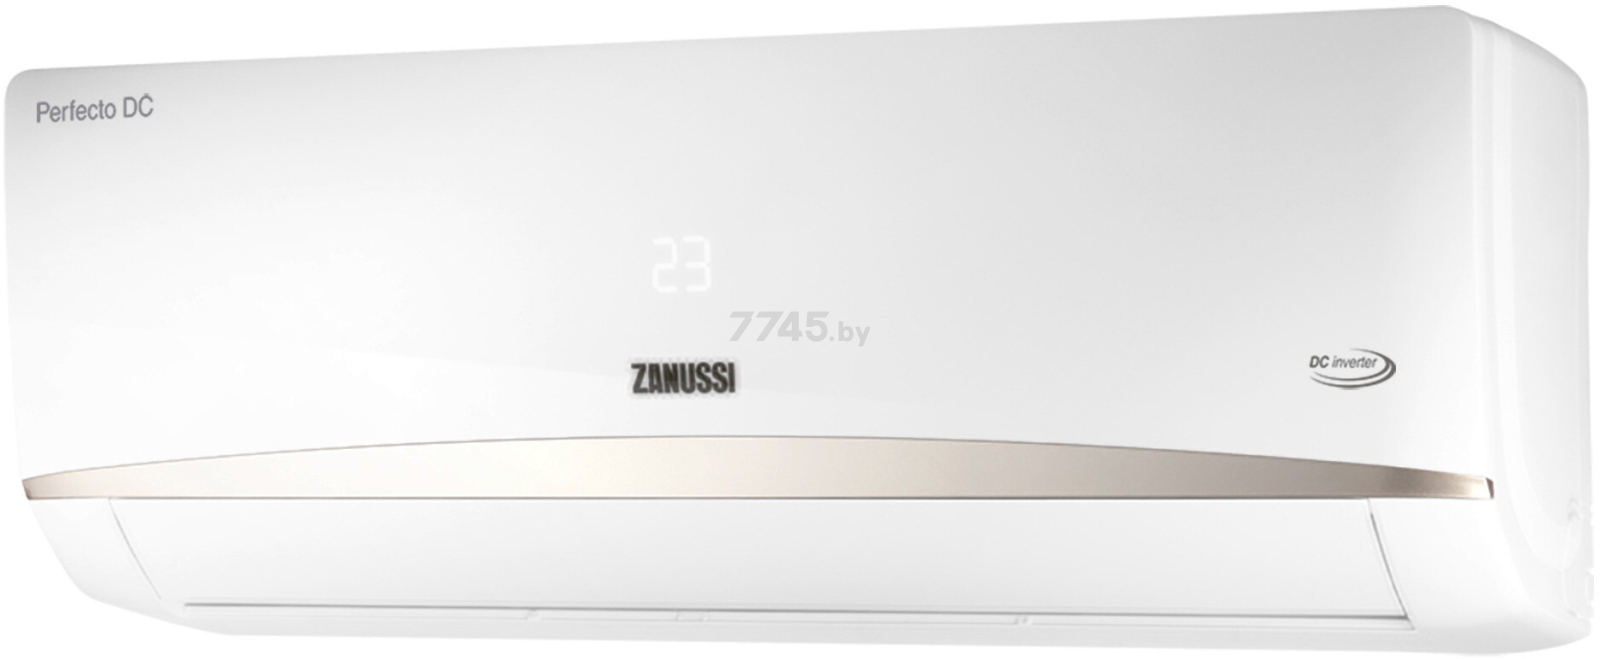 Сплит-система ZANUSSI Perfecto DC Inverter ZACS/I-09 HPF/A22/N8